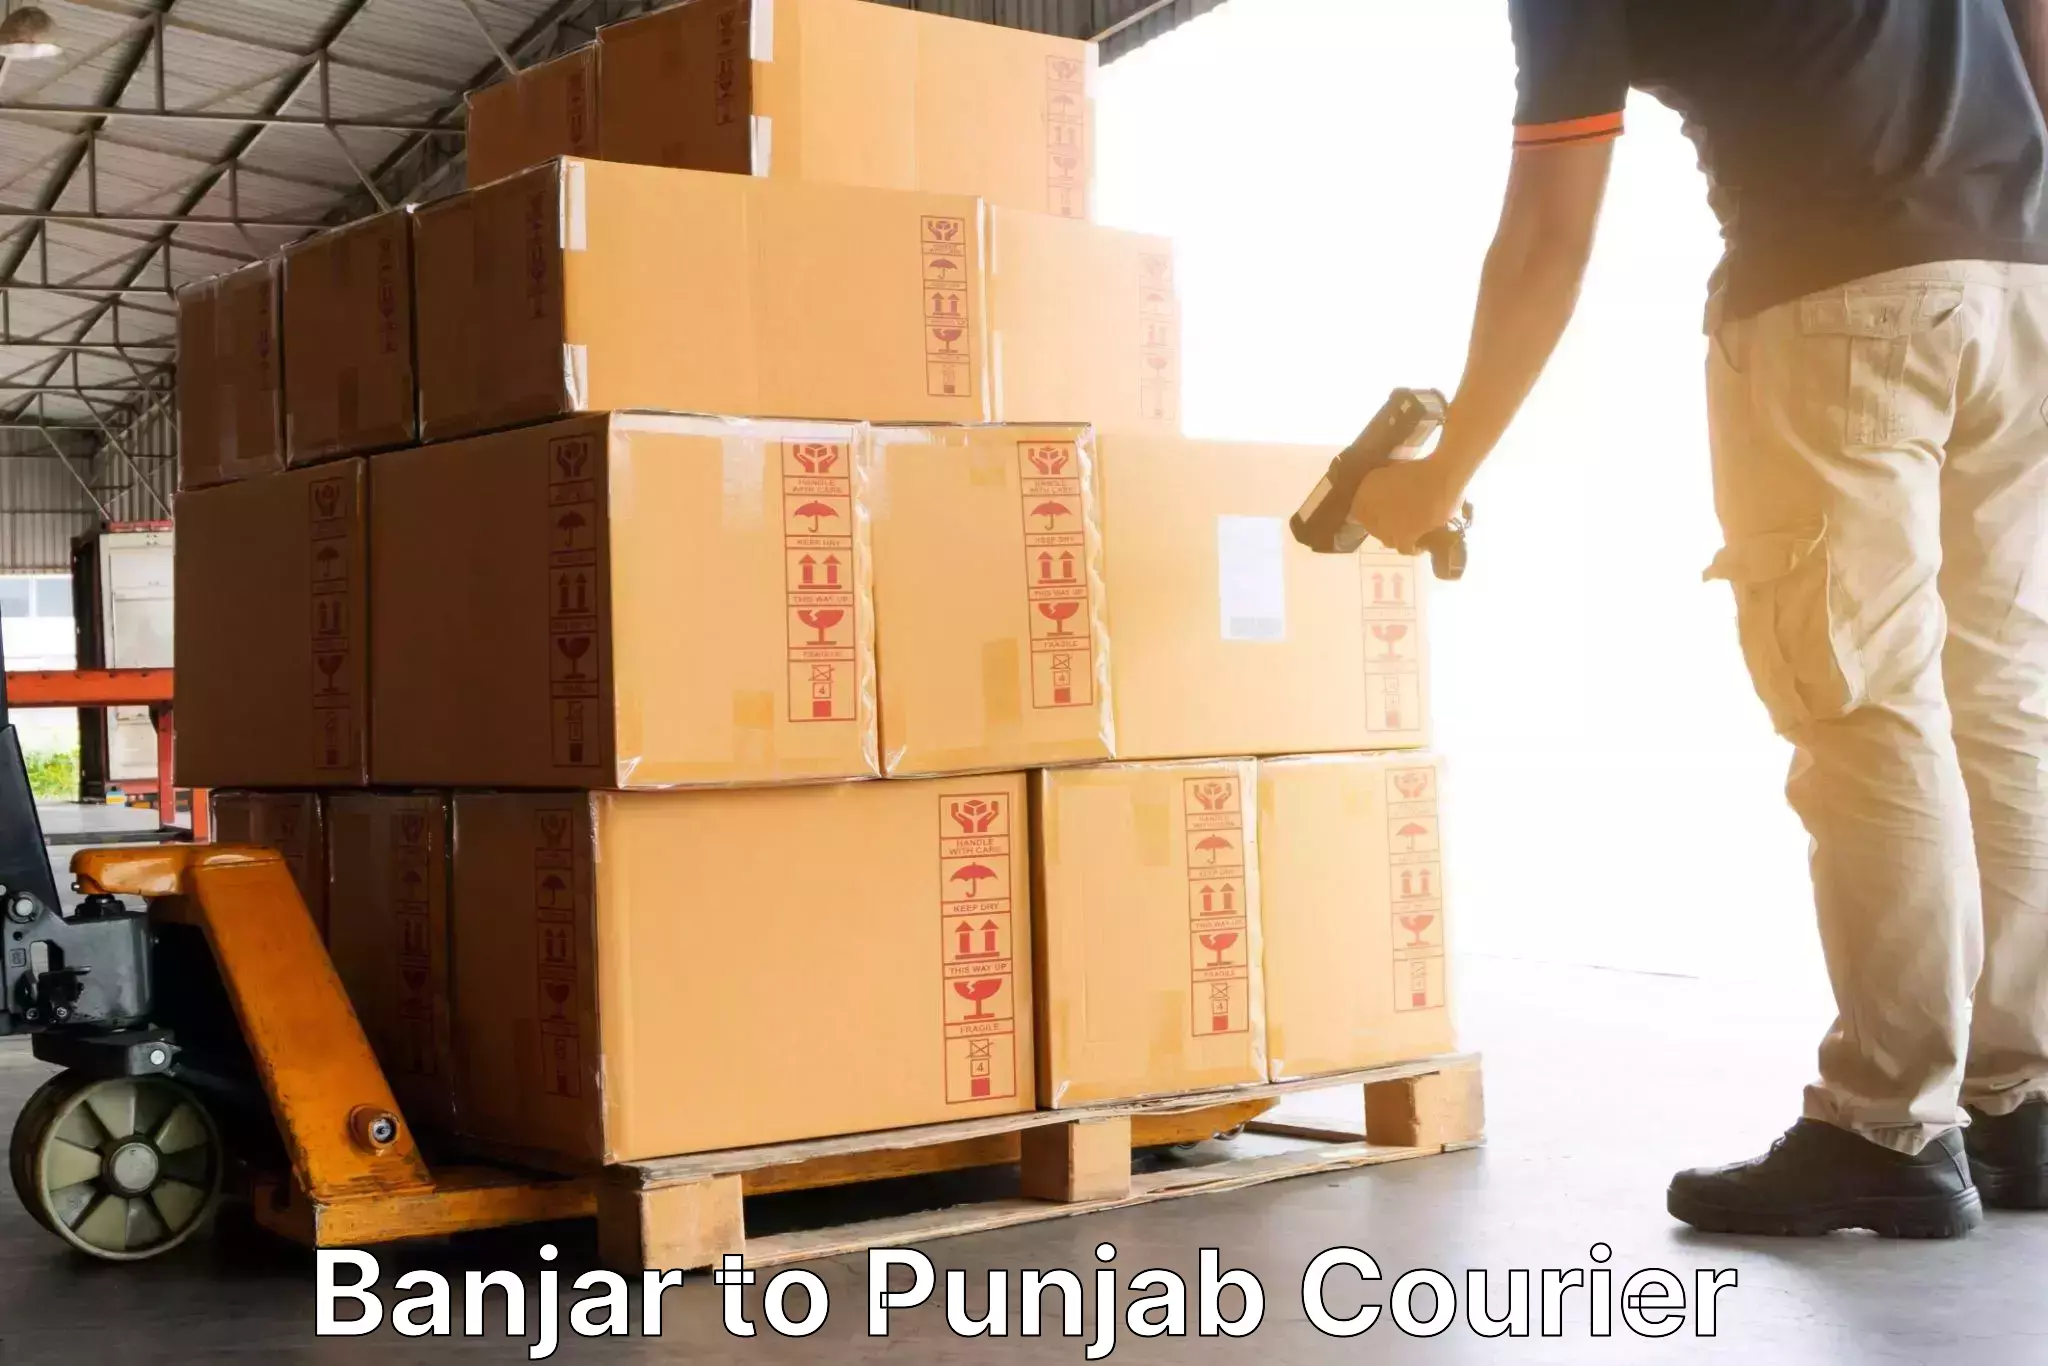 On-demand courier Banjar to Punjab